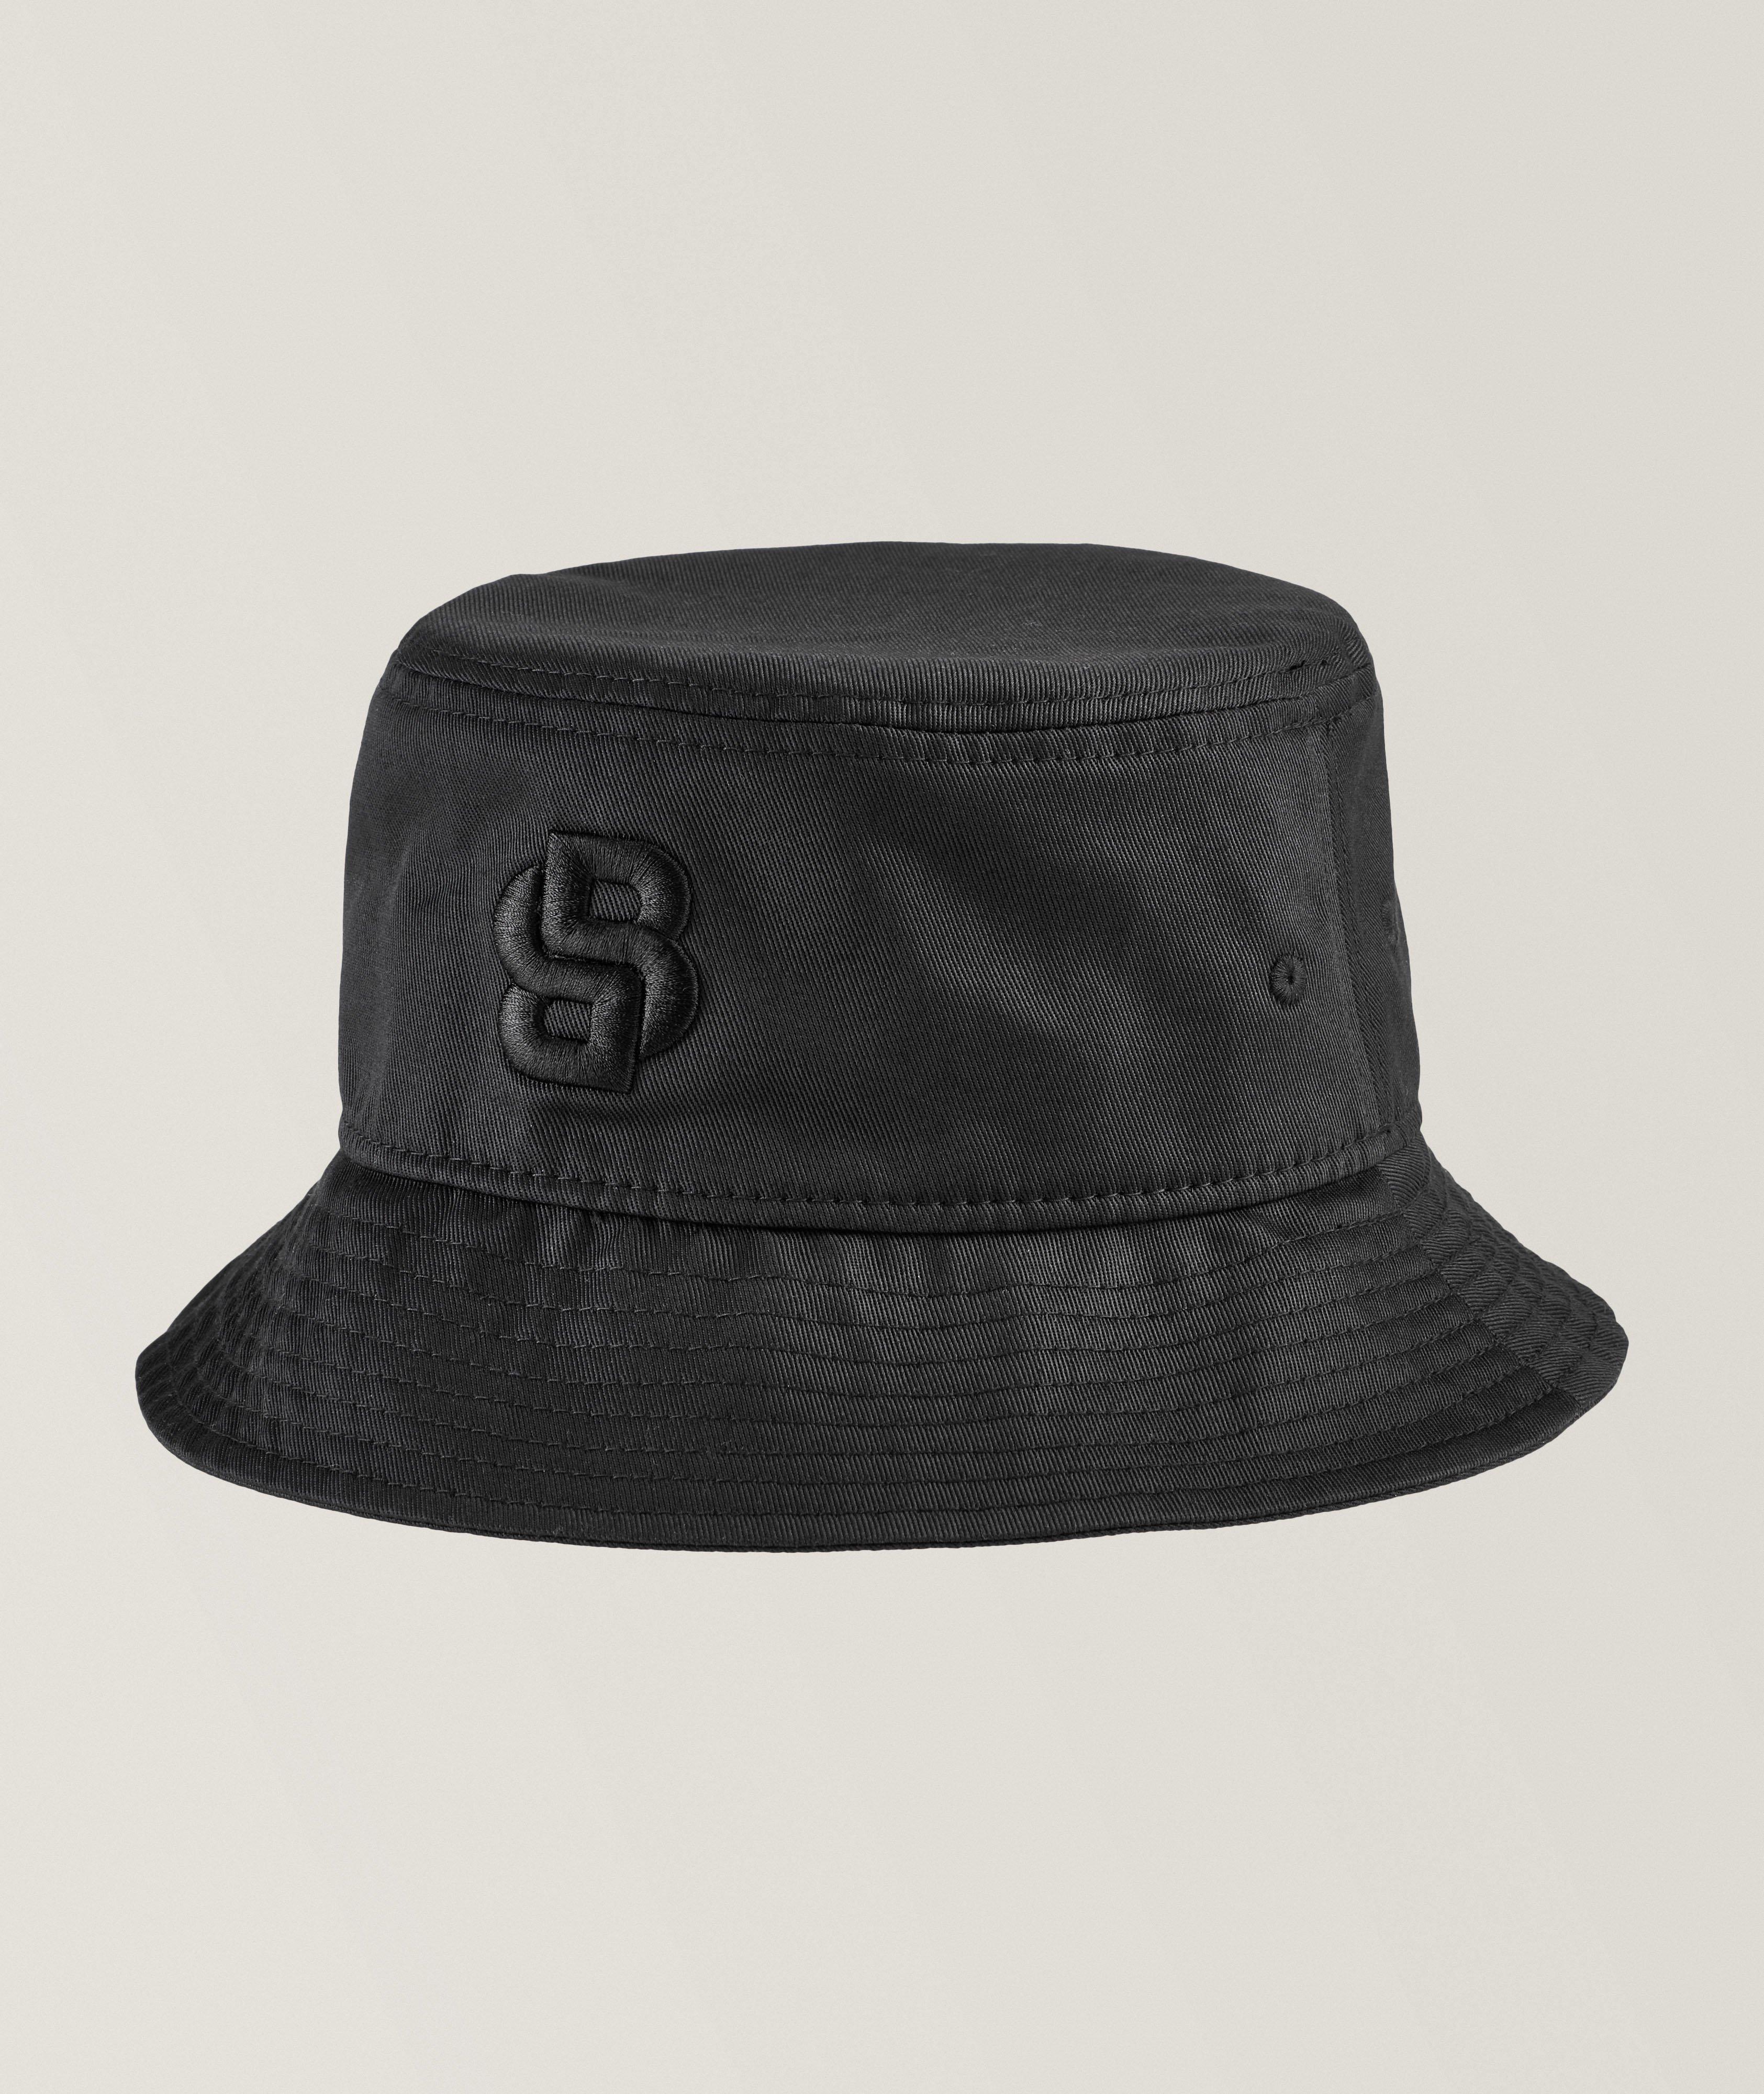 Saul B Iconic Cotton Bucket Hat